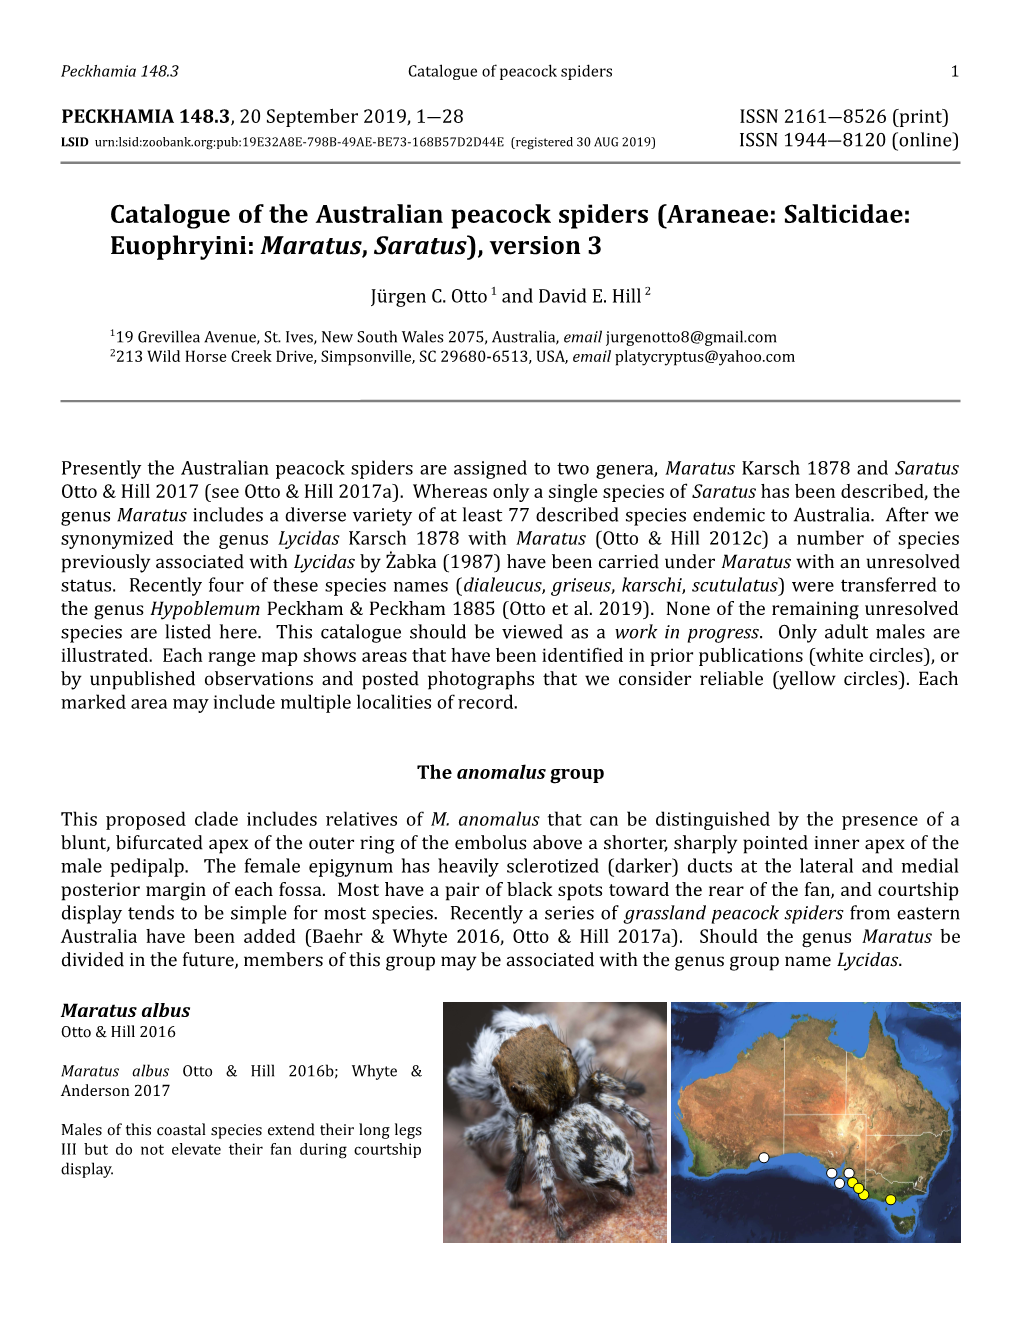 Catalogue of the Australian Peacock Spiders (Araneae: Salticidae: Euophryini: Maratus, Saratus), Version 3